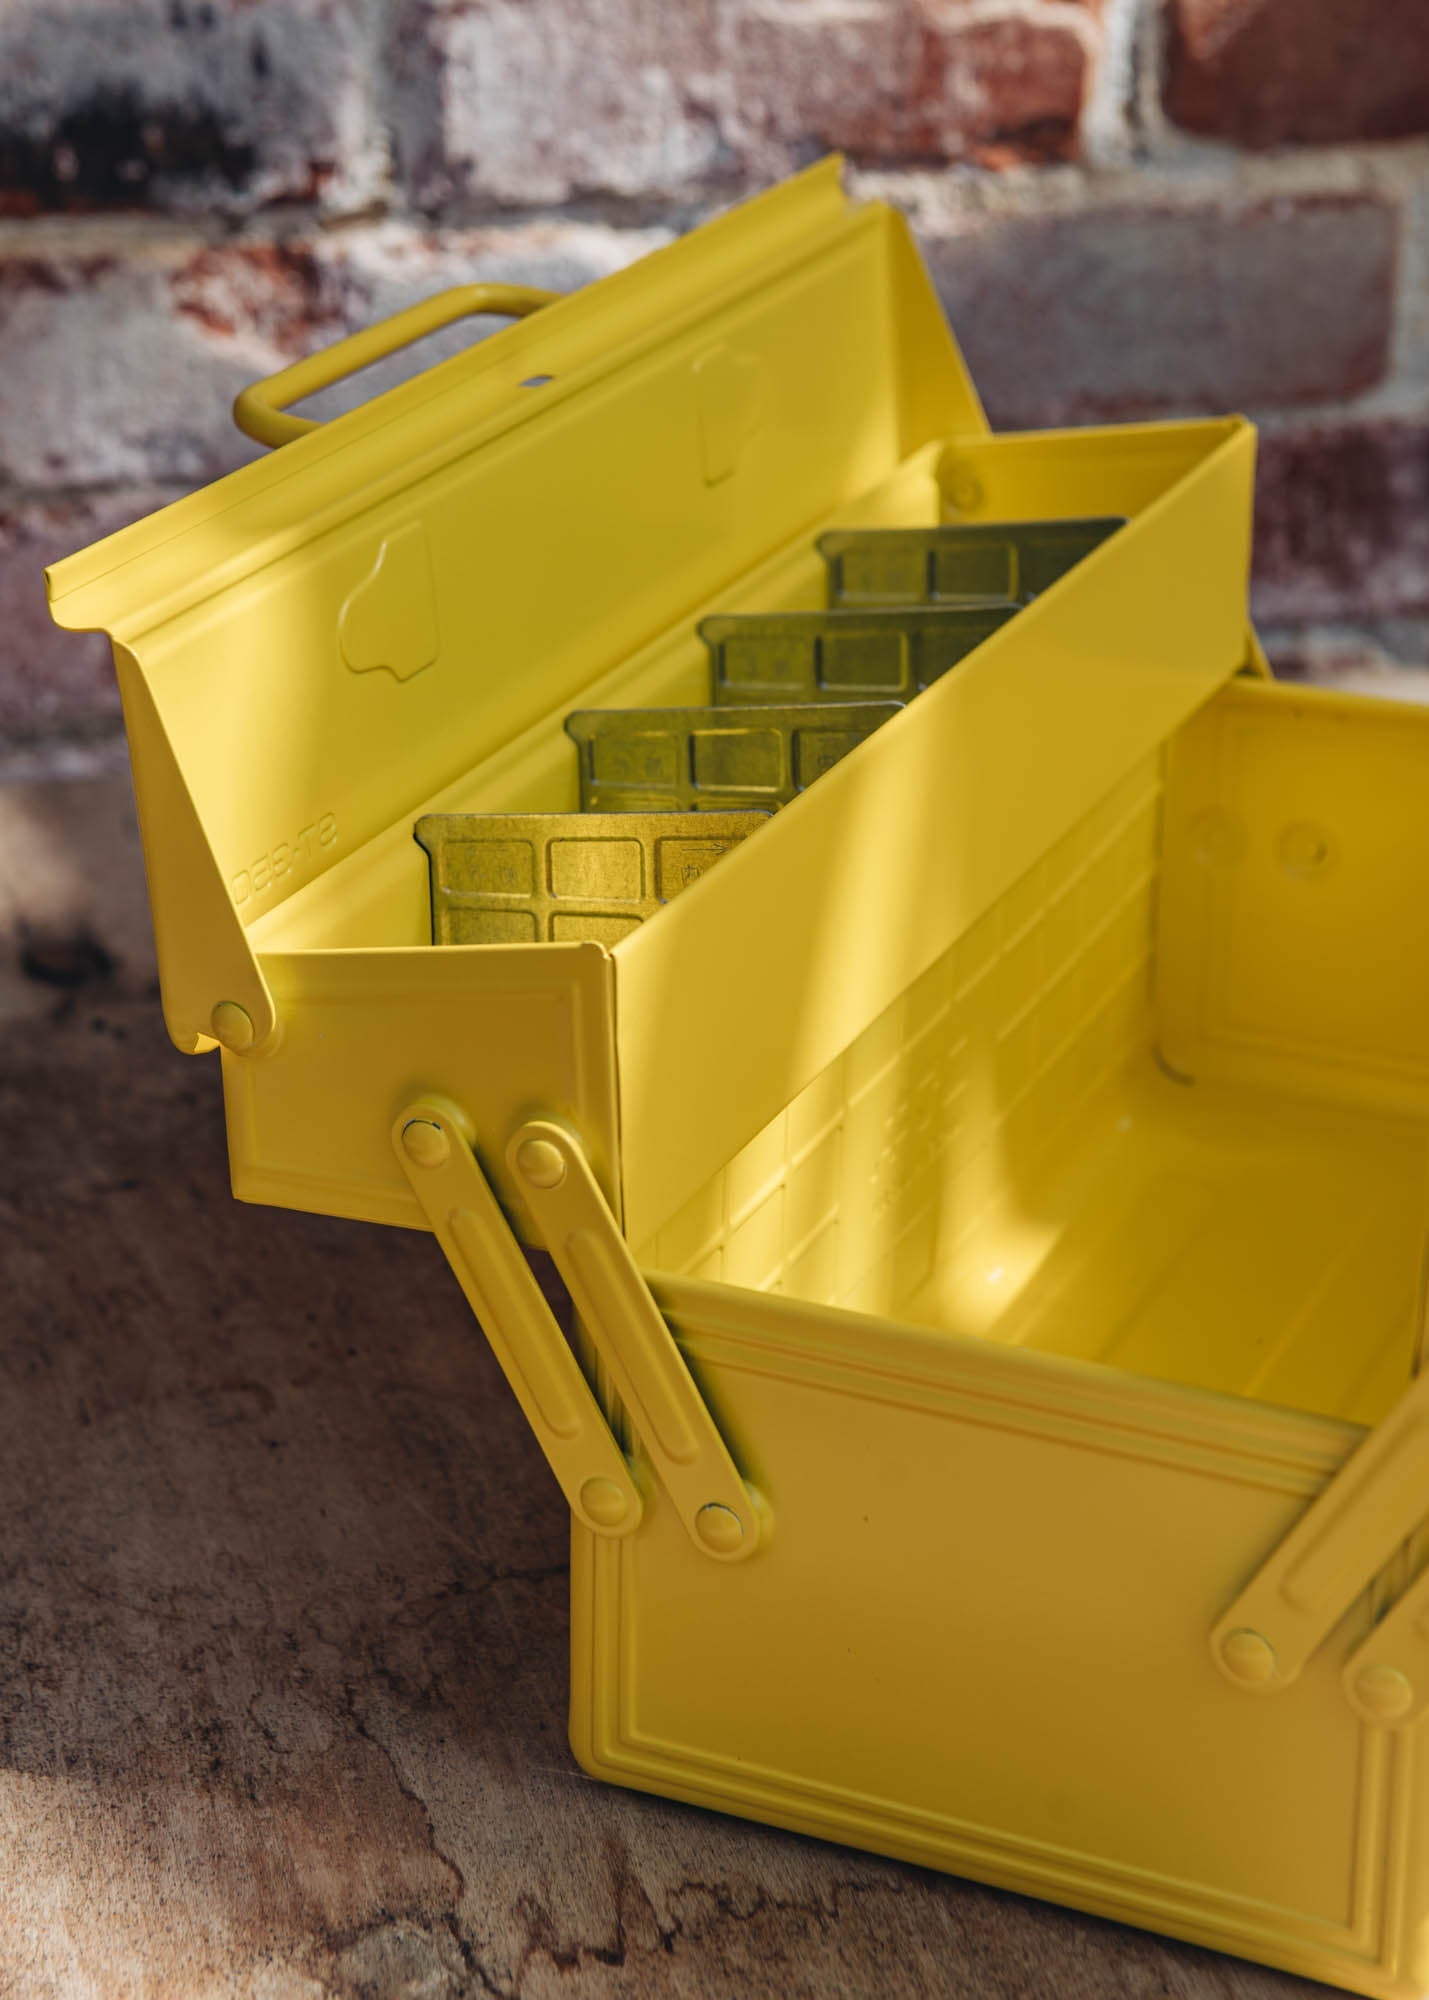 ST-Type Tool Box in Yellow